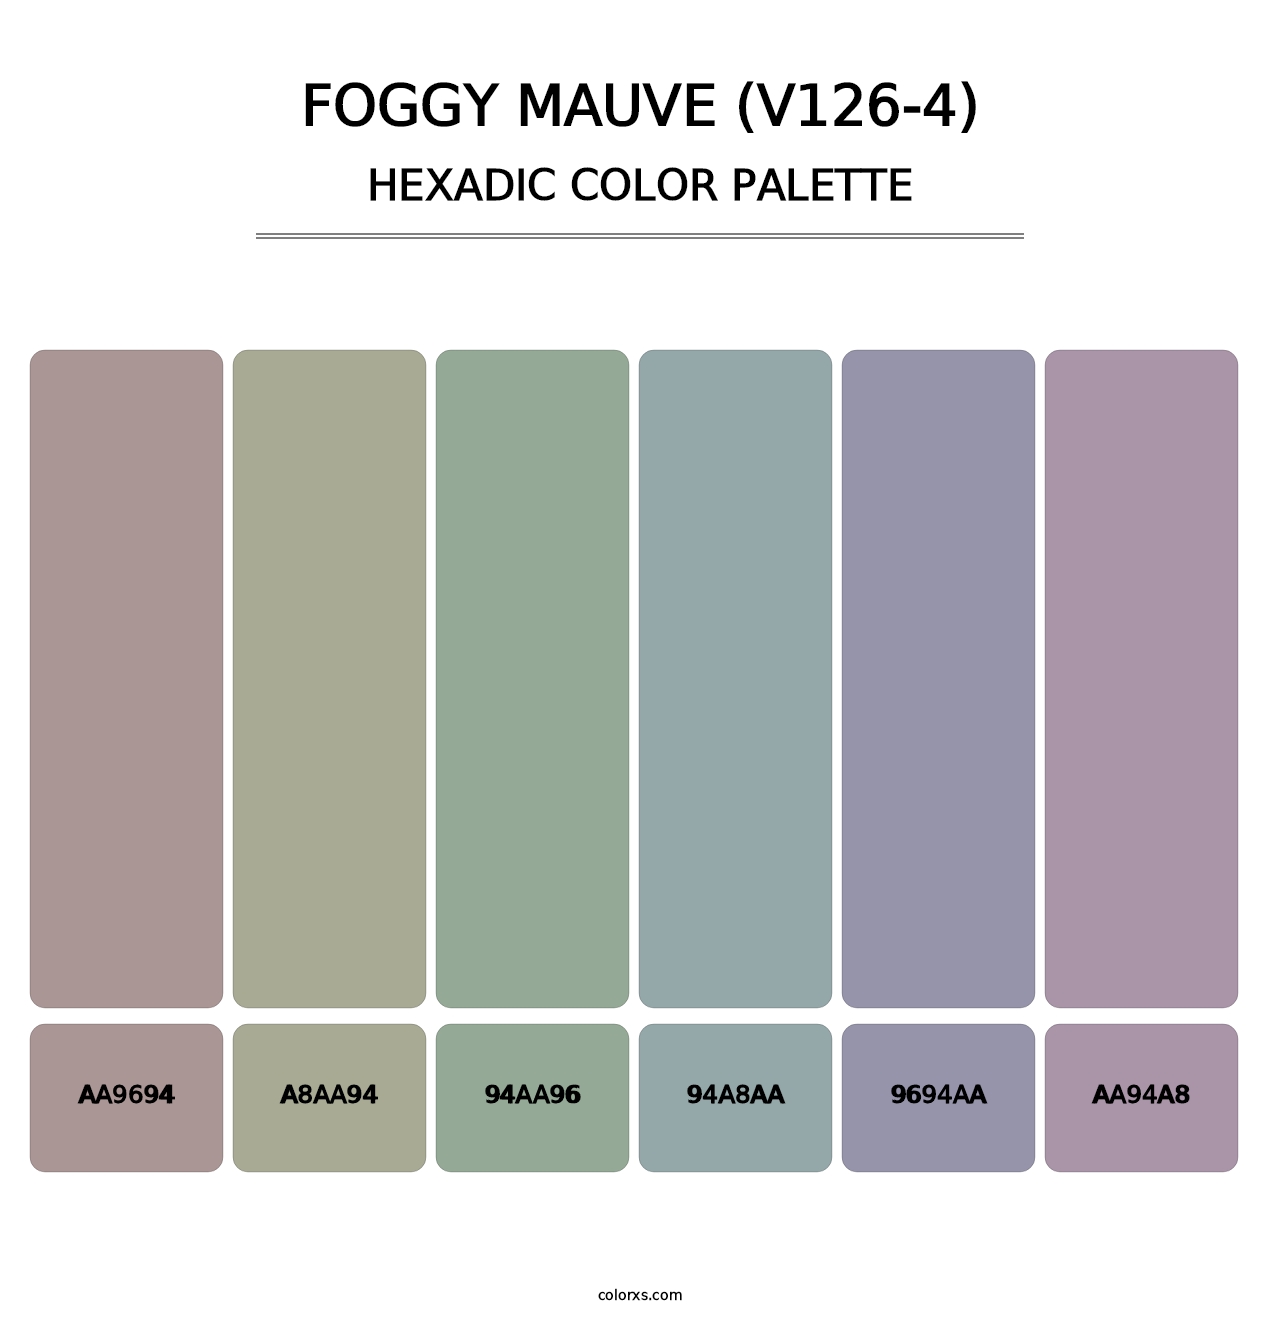 Foggy Mauve (V126-4) - Hexadic Color Palette